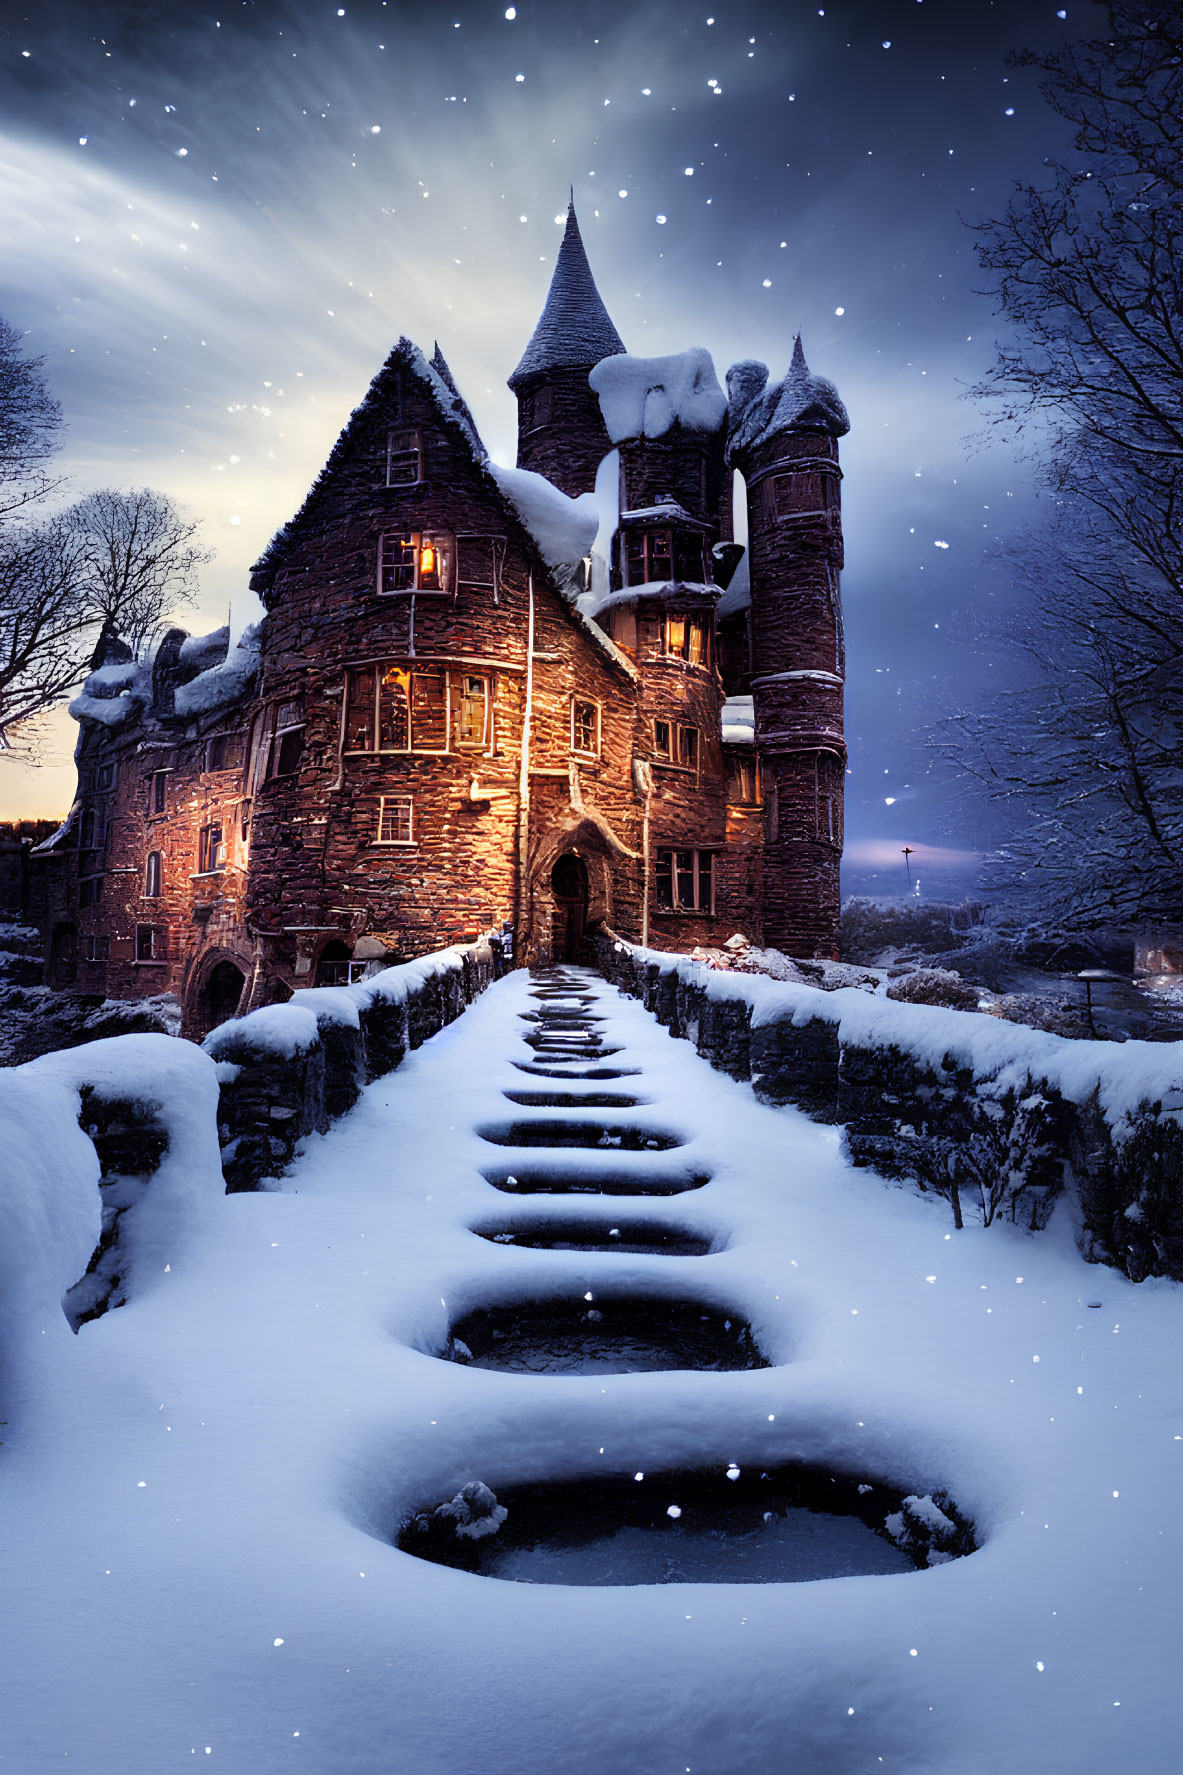 Twilight snow-covered gothic castle with illuminated windows